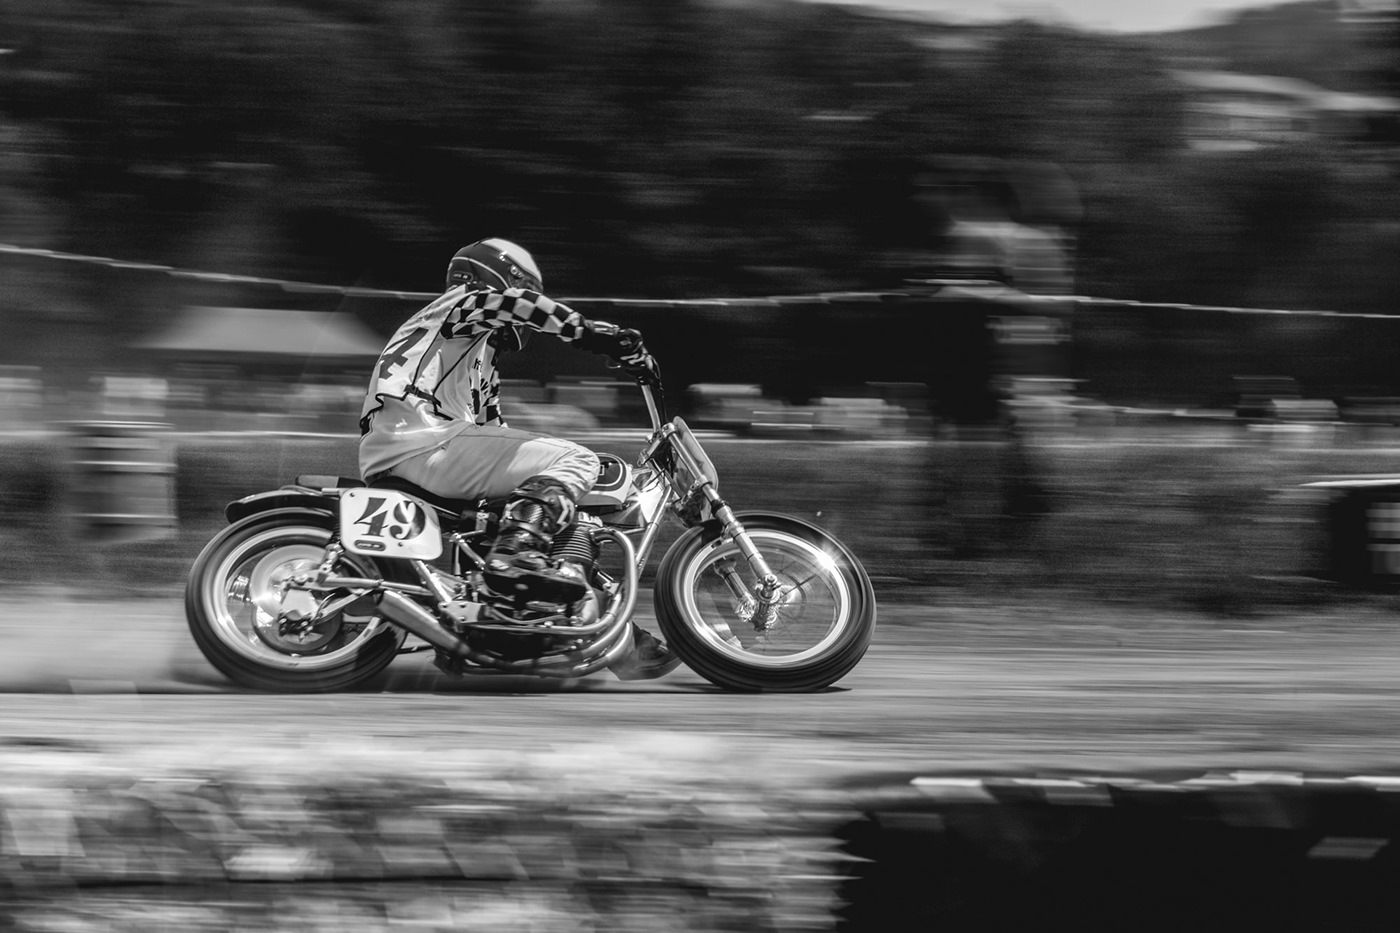 Wheels and waves el rollo 2017 wesley wilquin photo photographe biarritz photographe bayonne motorcycle black and white race